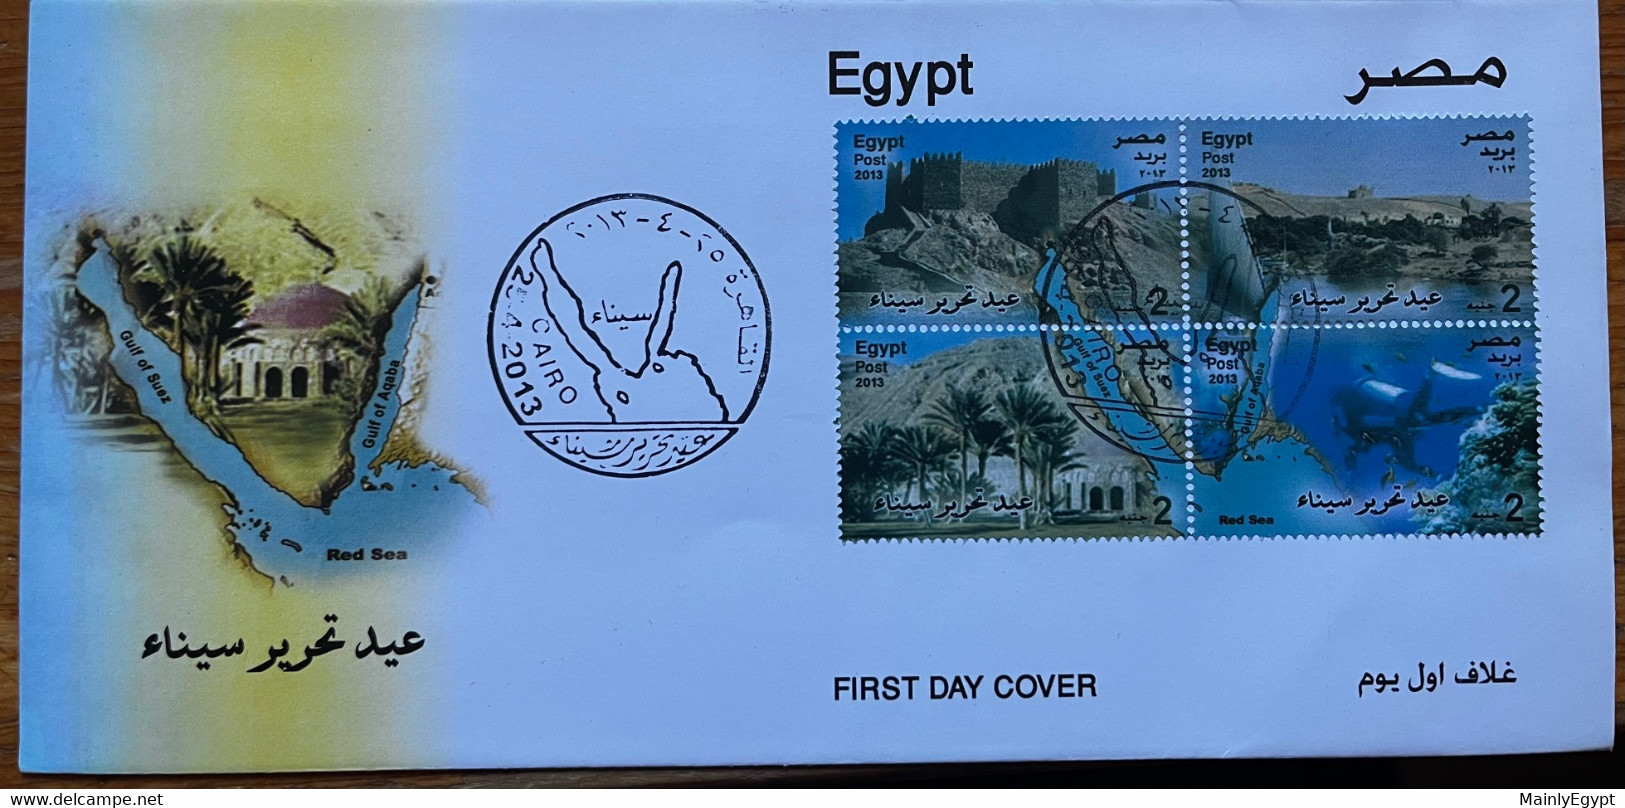 EGYPT: Five FDCs 2012-2013 (F53B) - Covers & Documents